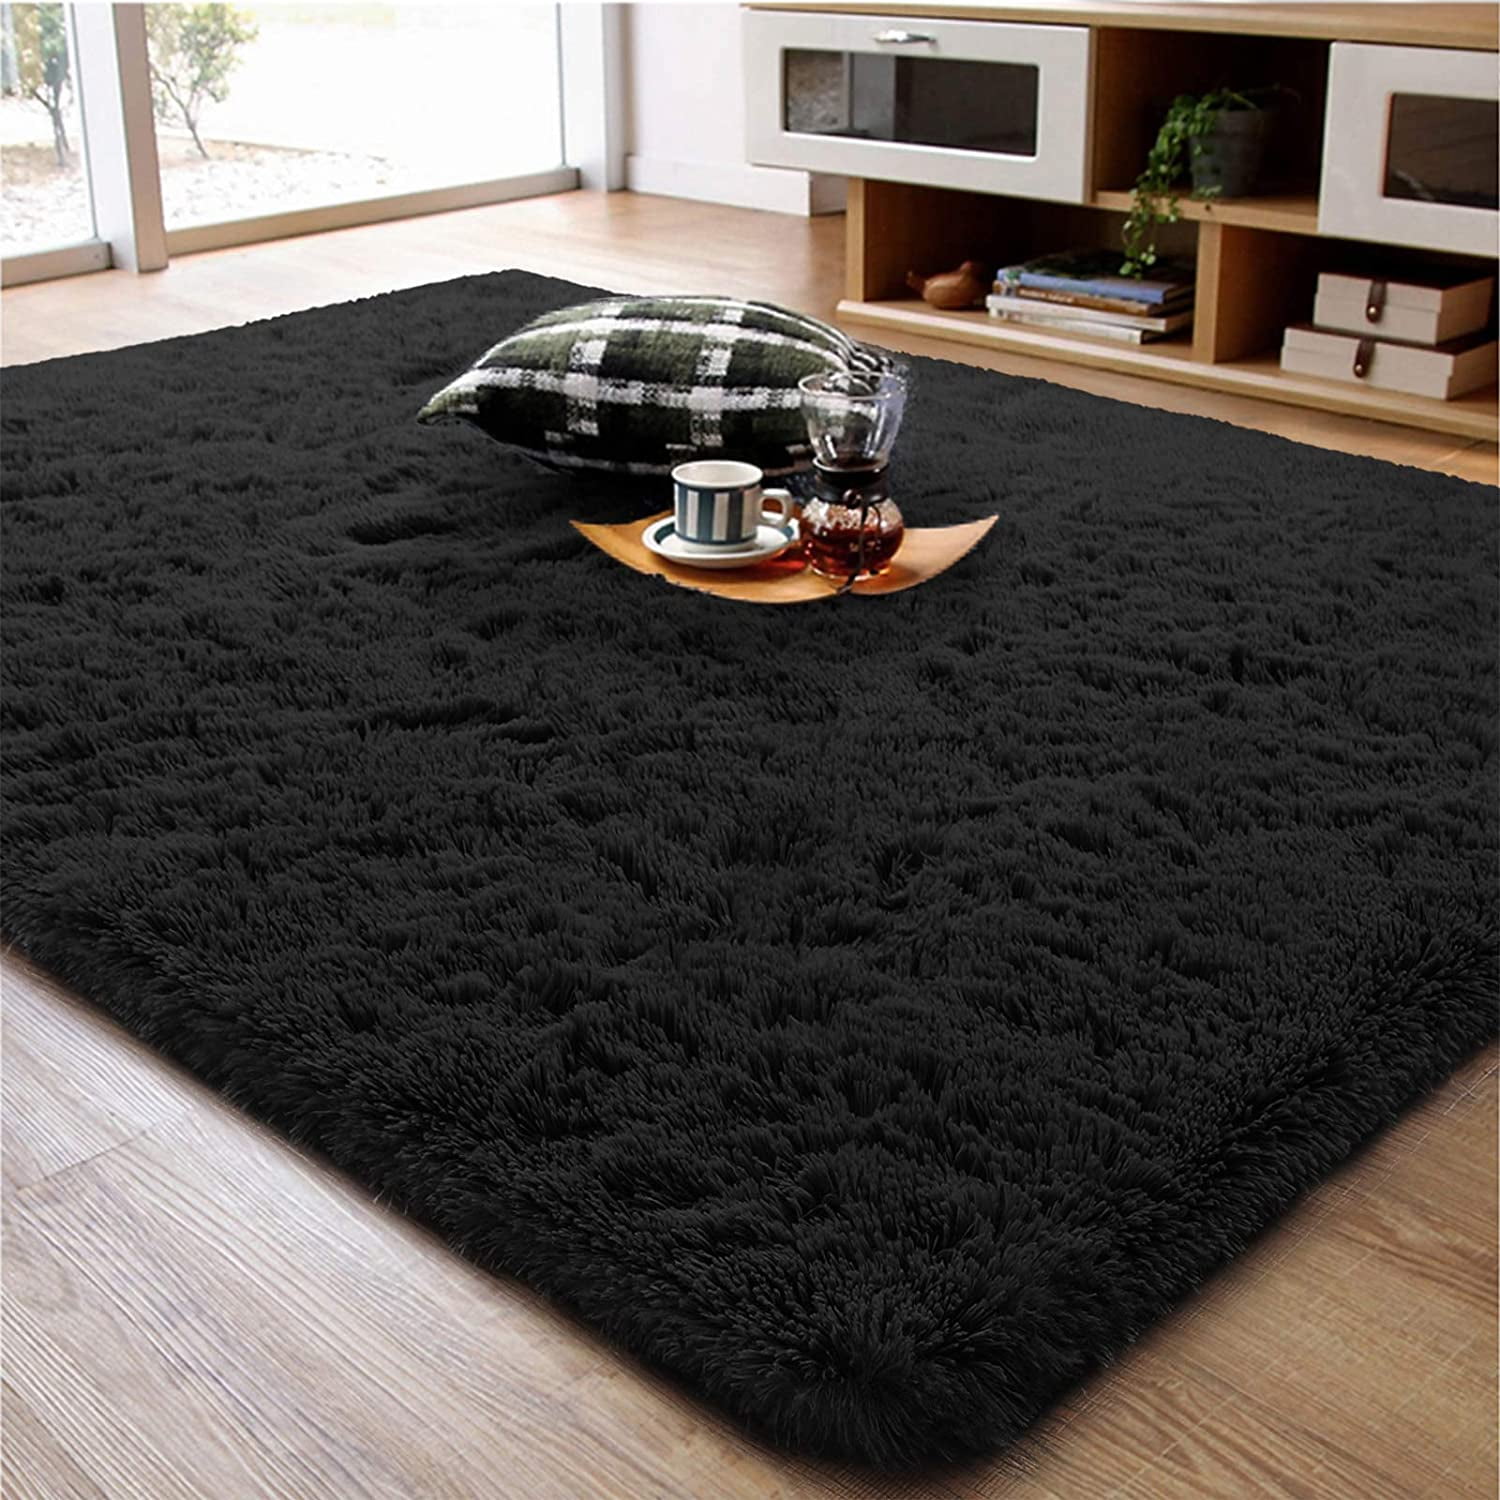 Grey Noahas Ultra Soft Fluffy Bedroom Rugs Kids Room Carpet Modern Shaggy Area Rugs Home Decor 2.6' X 5.3' 